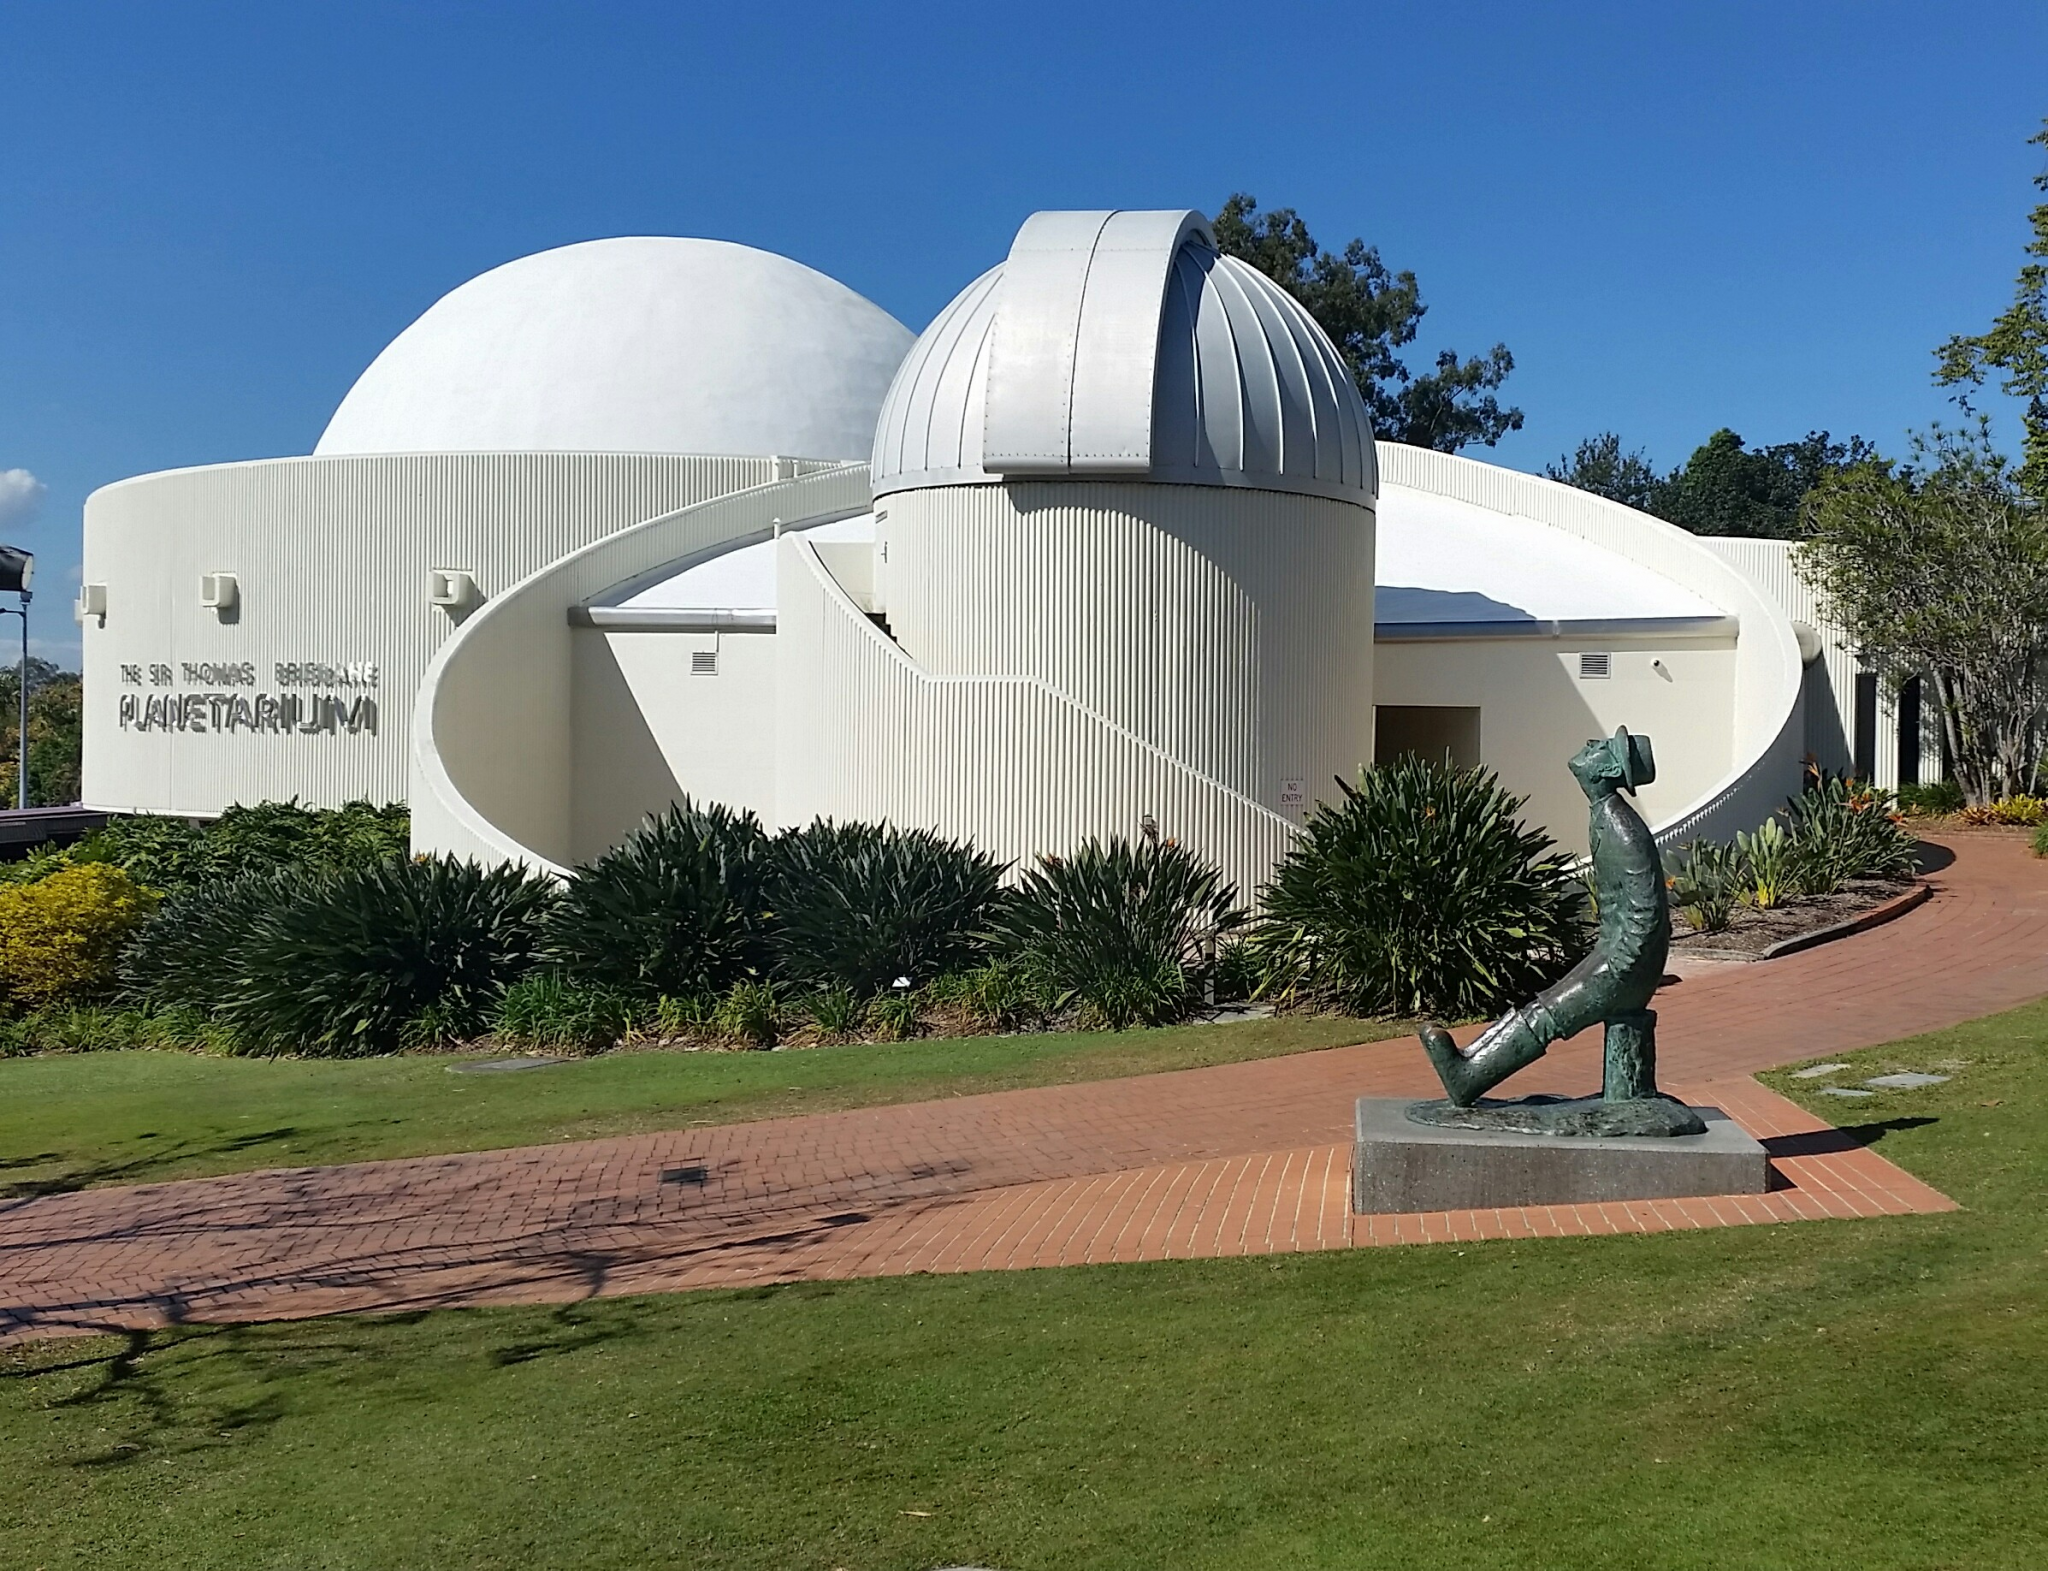 The Sir Thomas Brisbane Planetarium is located on the grounds of the Brisbane Botanic Gardens ©The Sir Thomas Brisbane Planetarium